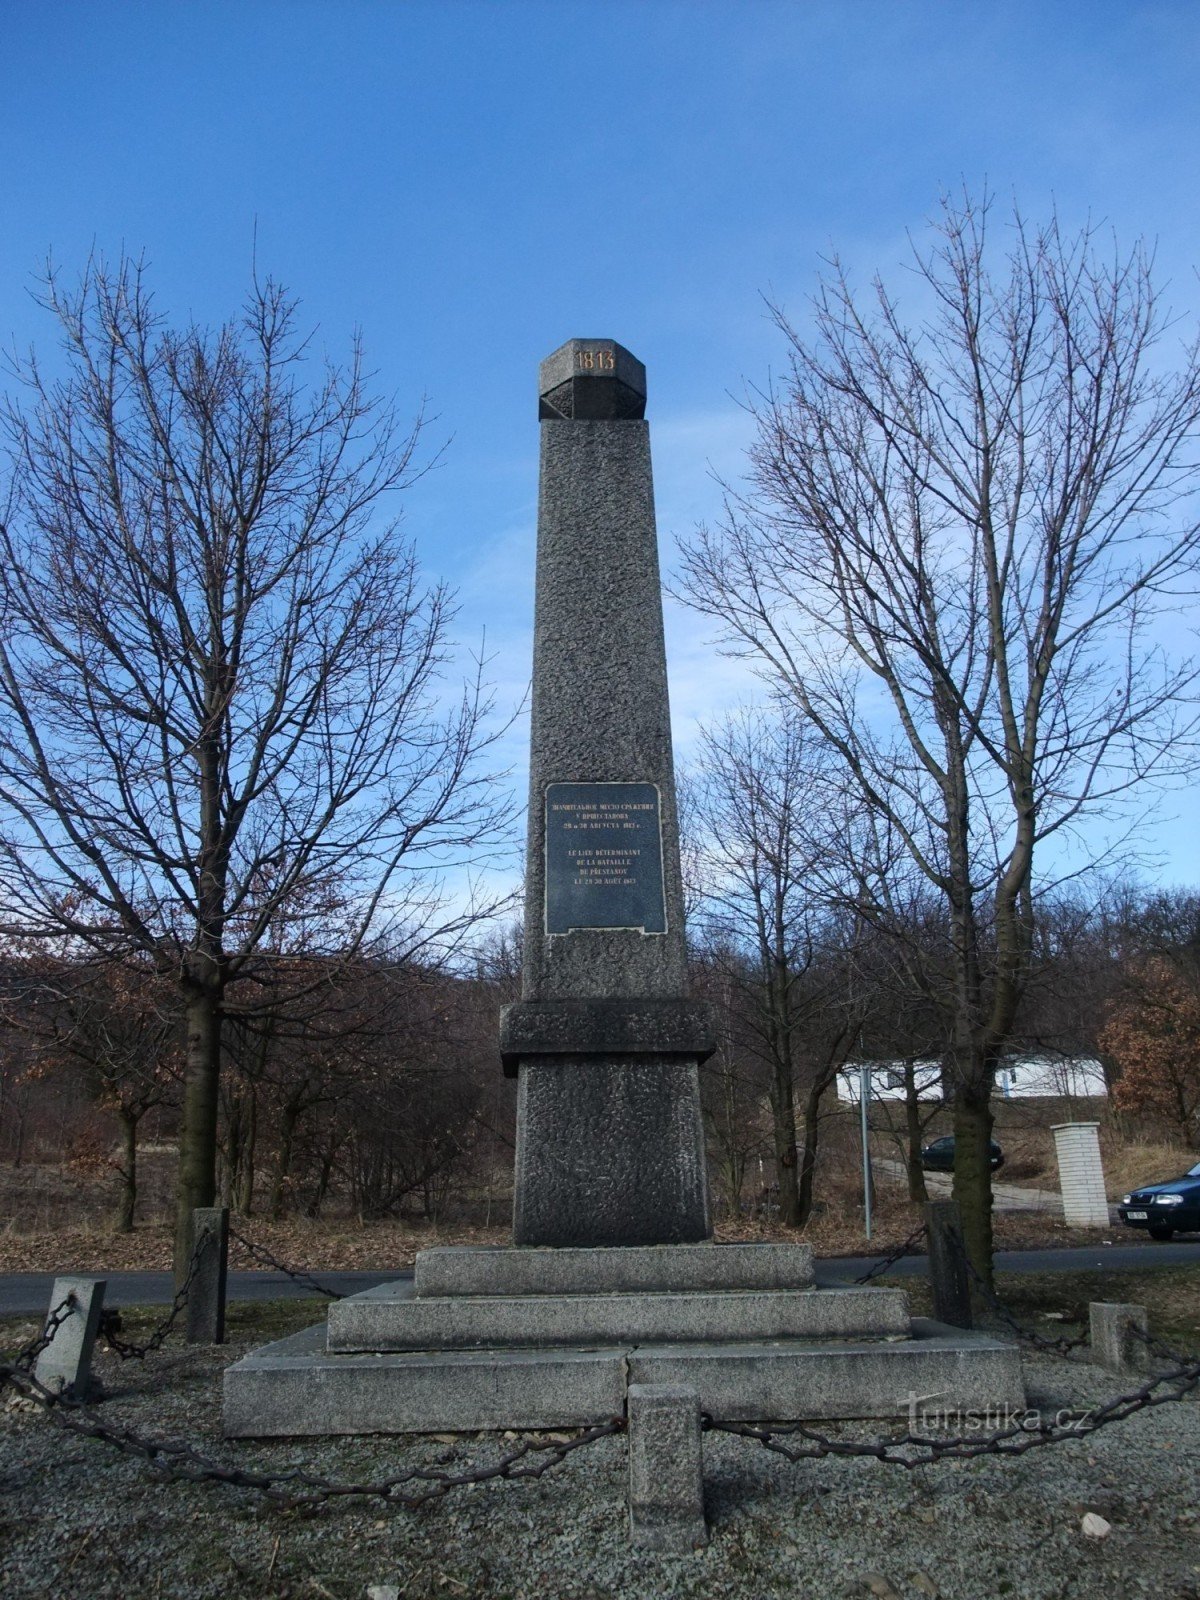 French monument near Přestanov